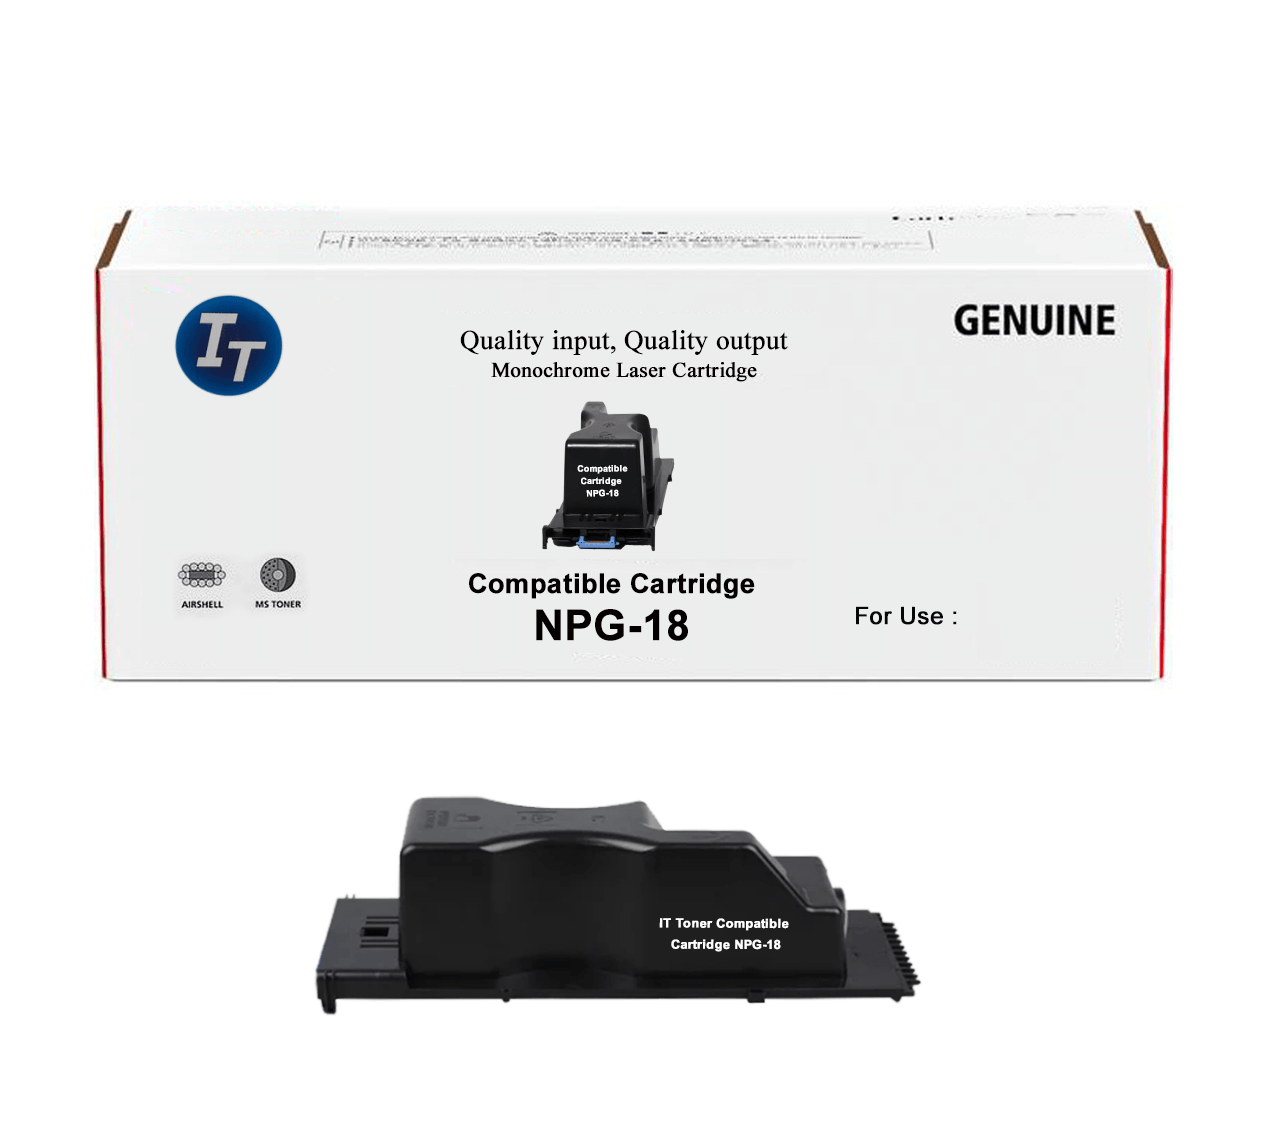 IT Toner Compatible Cartridge NPG-18 (2).png